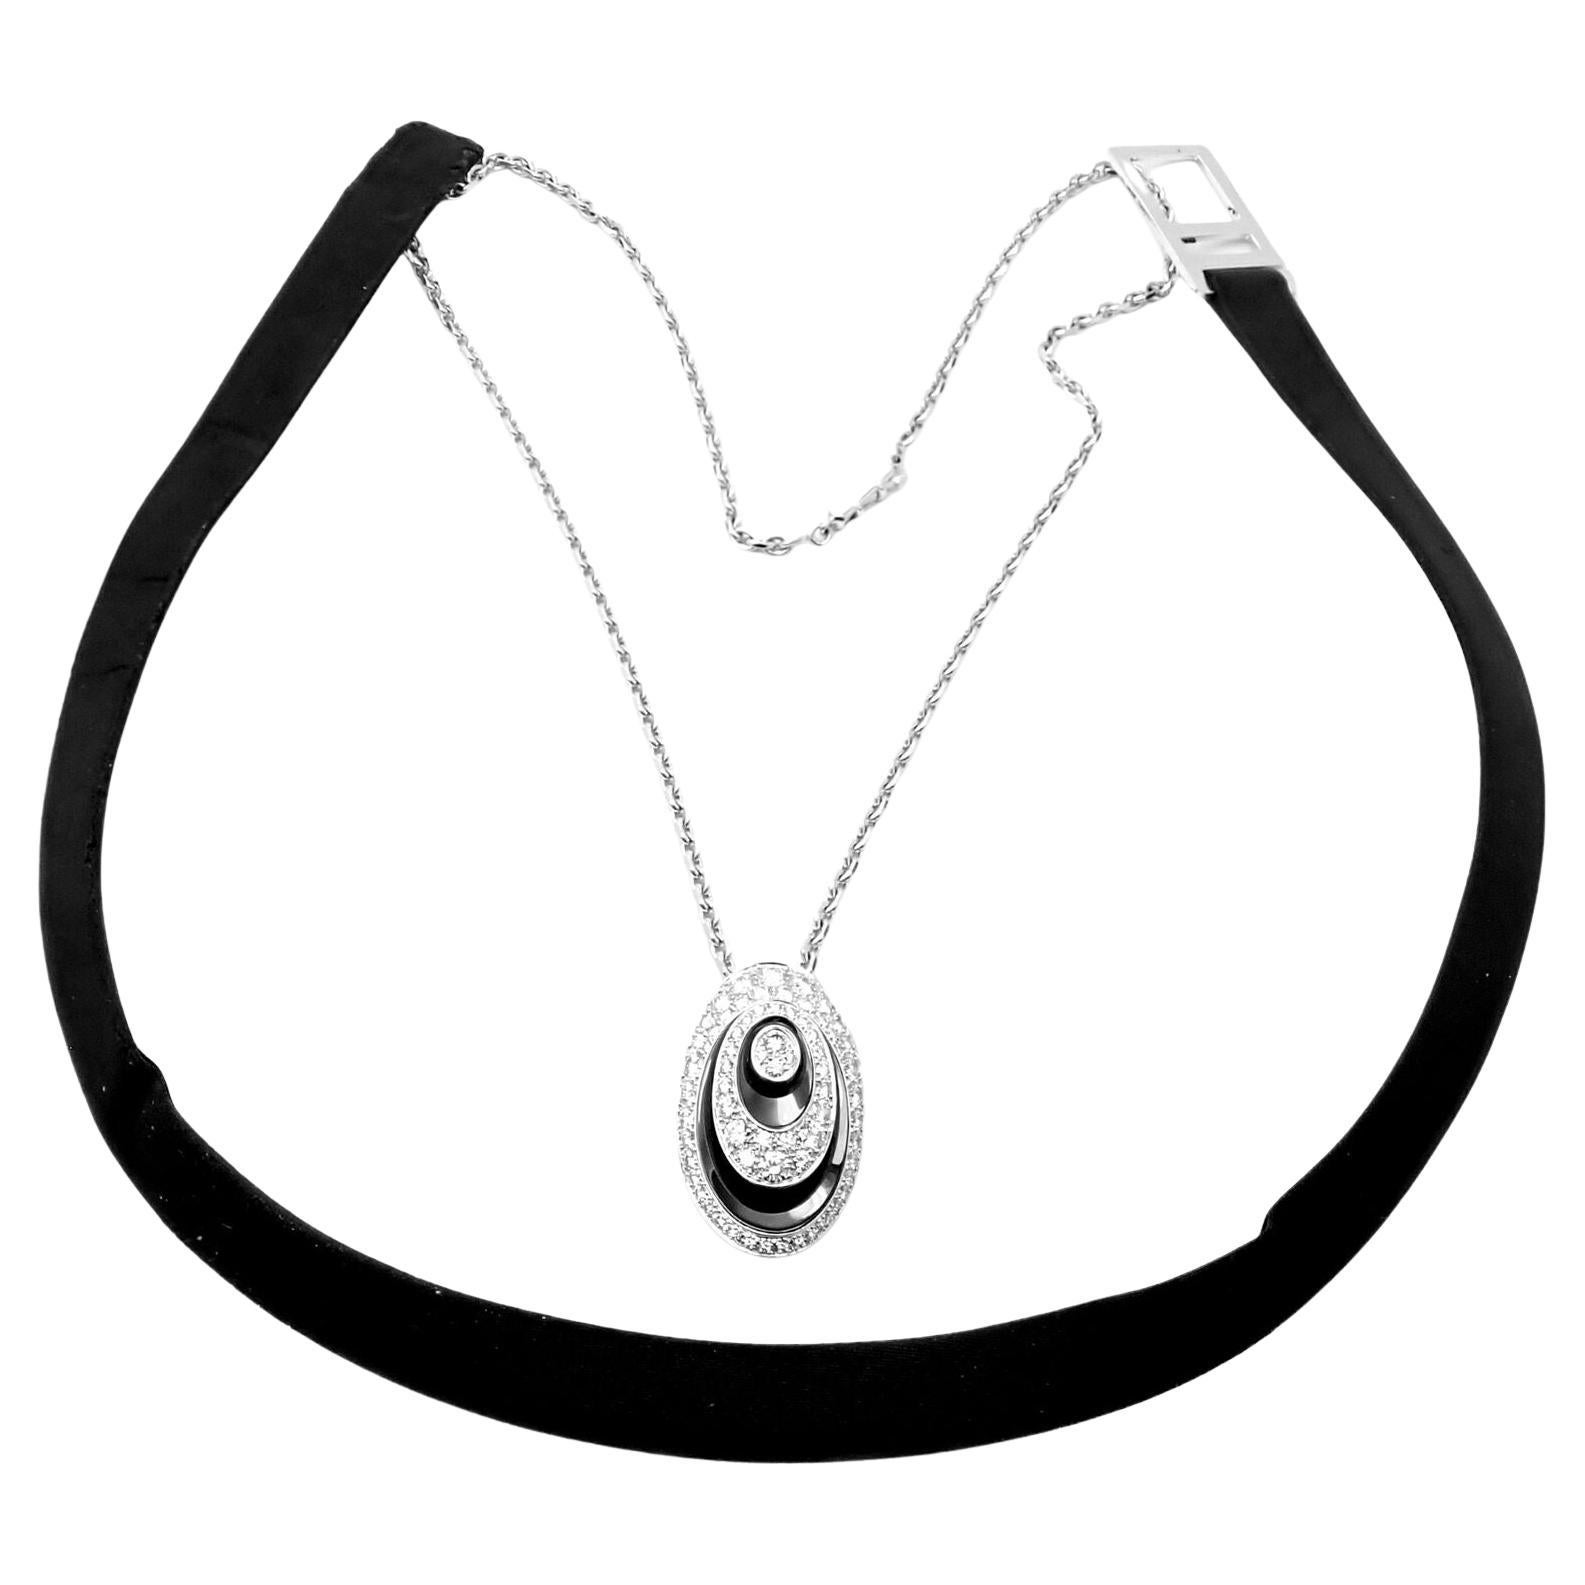 Cartier, collier pendentif hypnose en or blanc, chaîne et cordon de soie